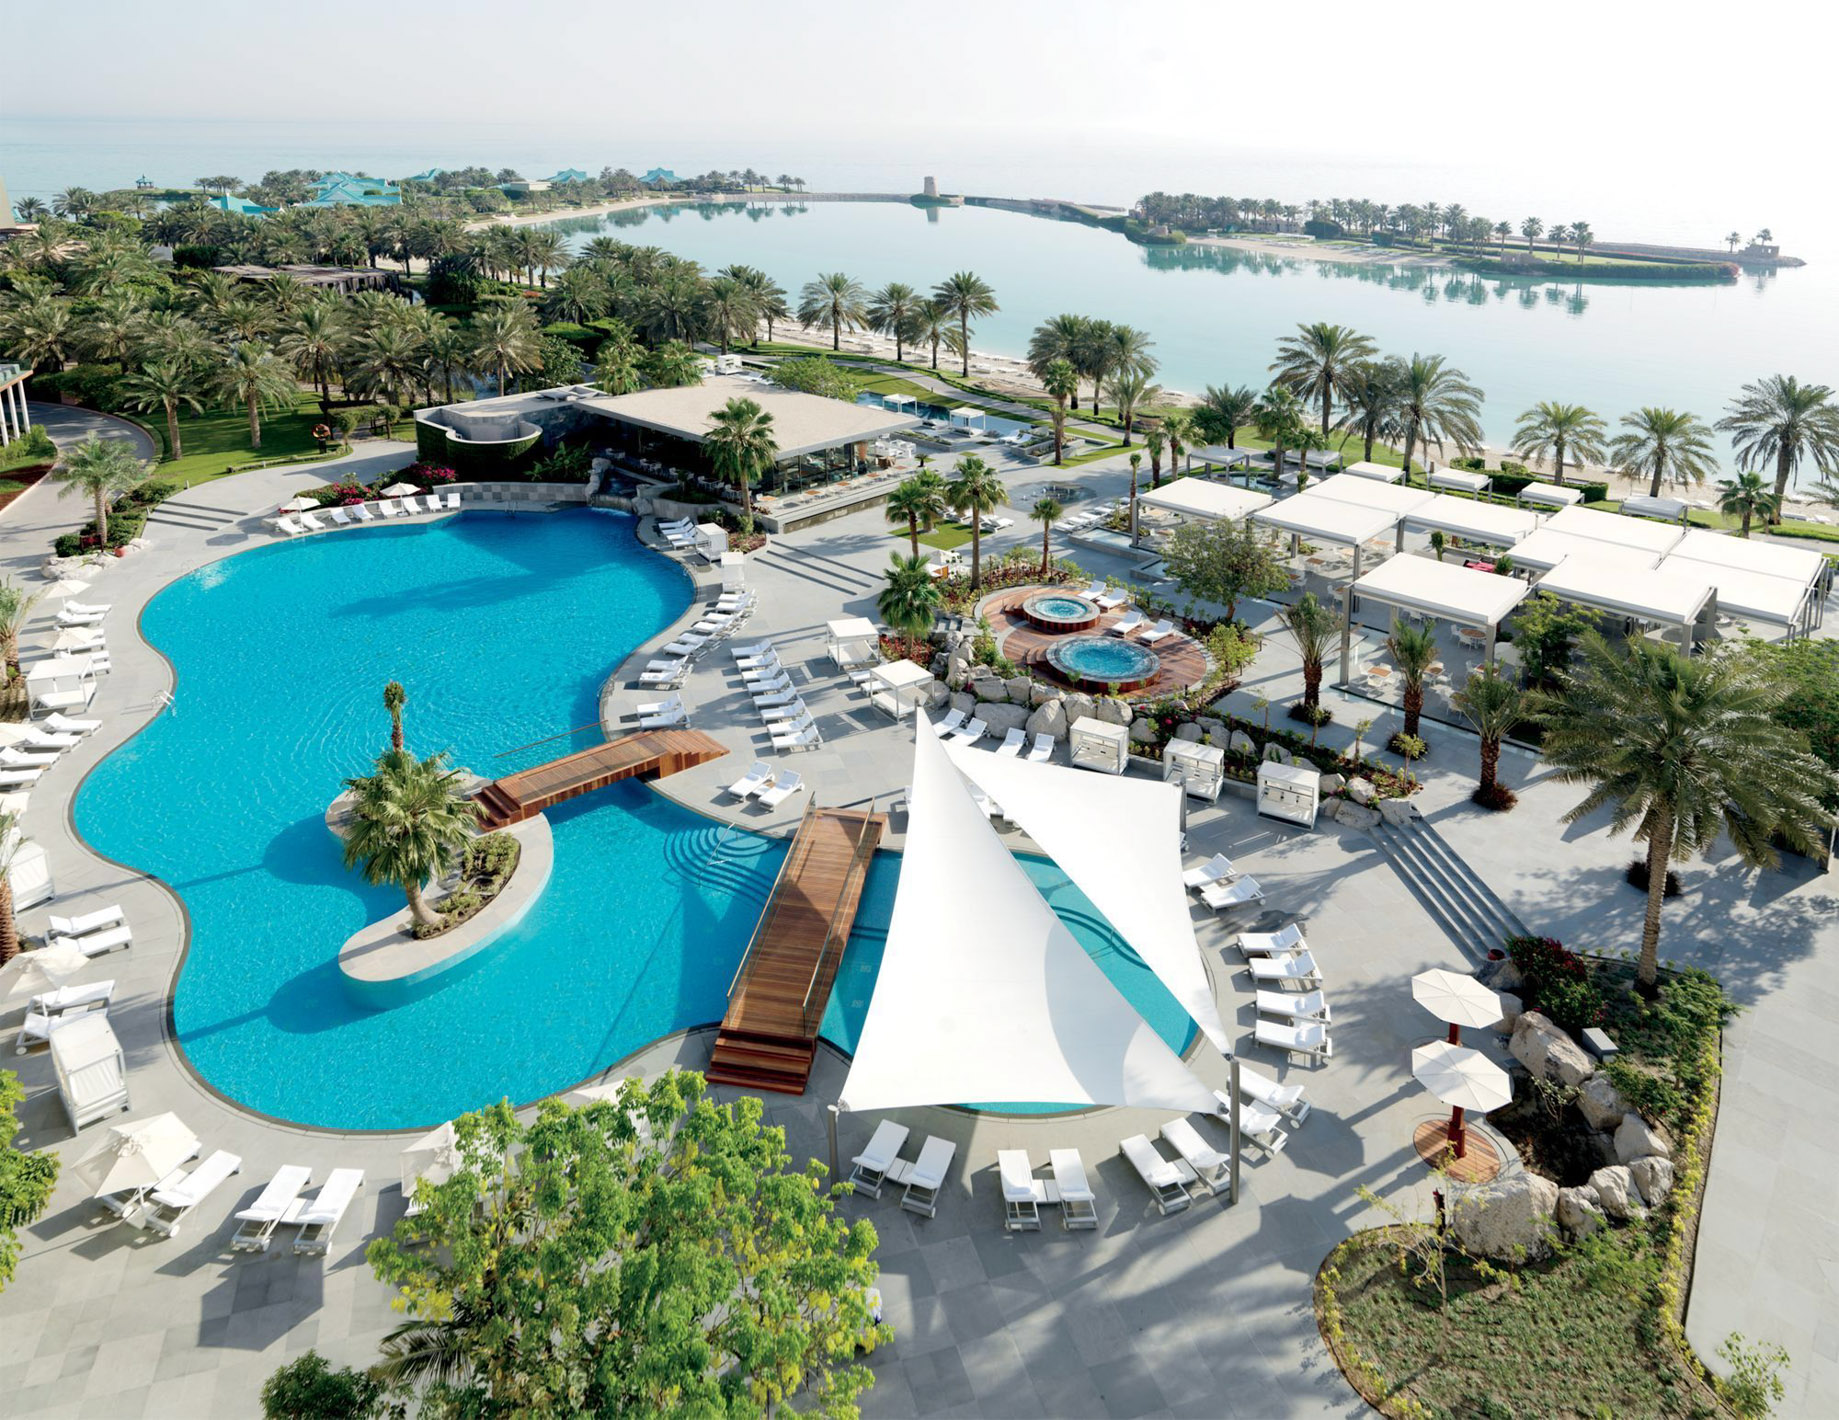 The Ritz-Carlton, Bahrain Resort Hotel – Manama, Bahrain – Resort Exterior Pool Aerial View